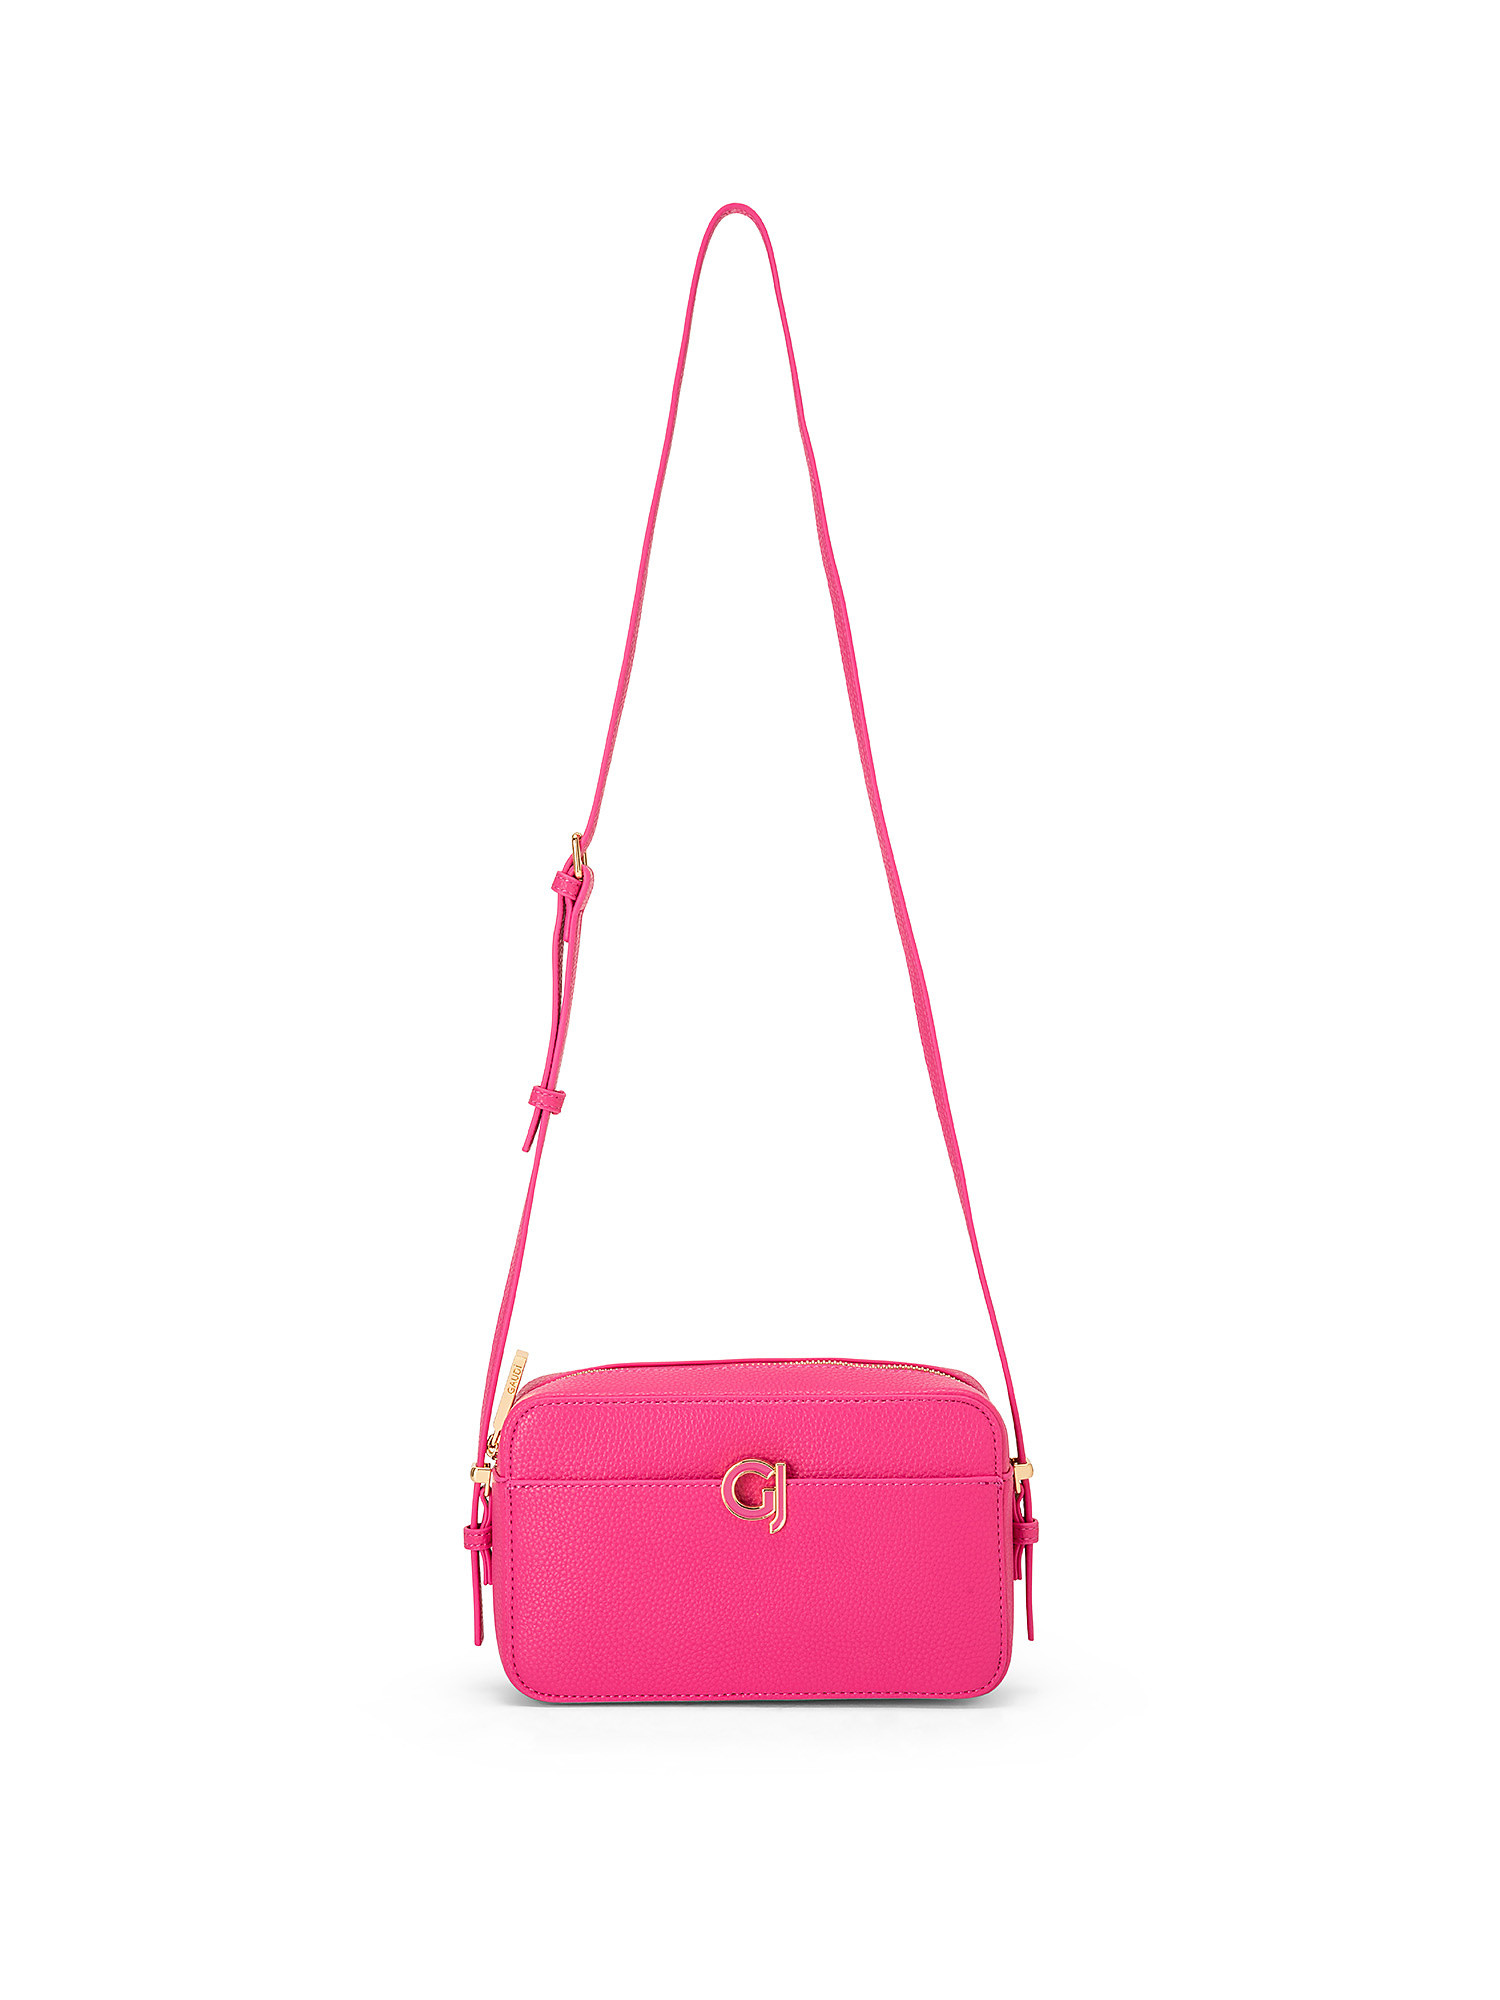 Sapphire crossbody bag, Pink Fuchsia, large image number 0